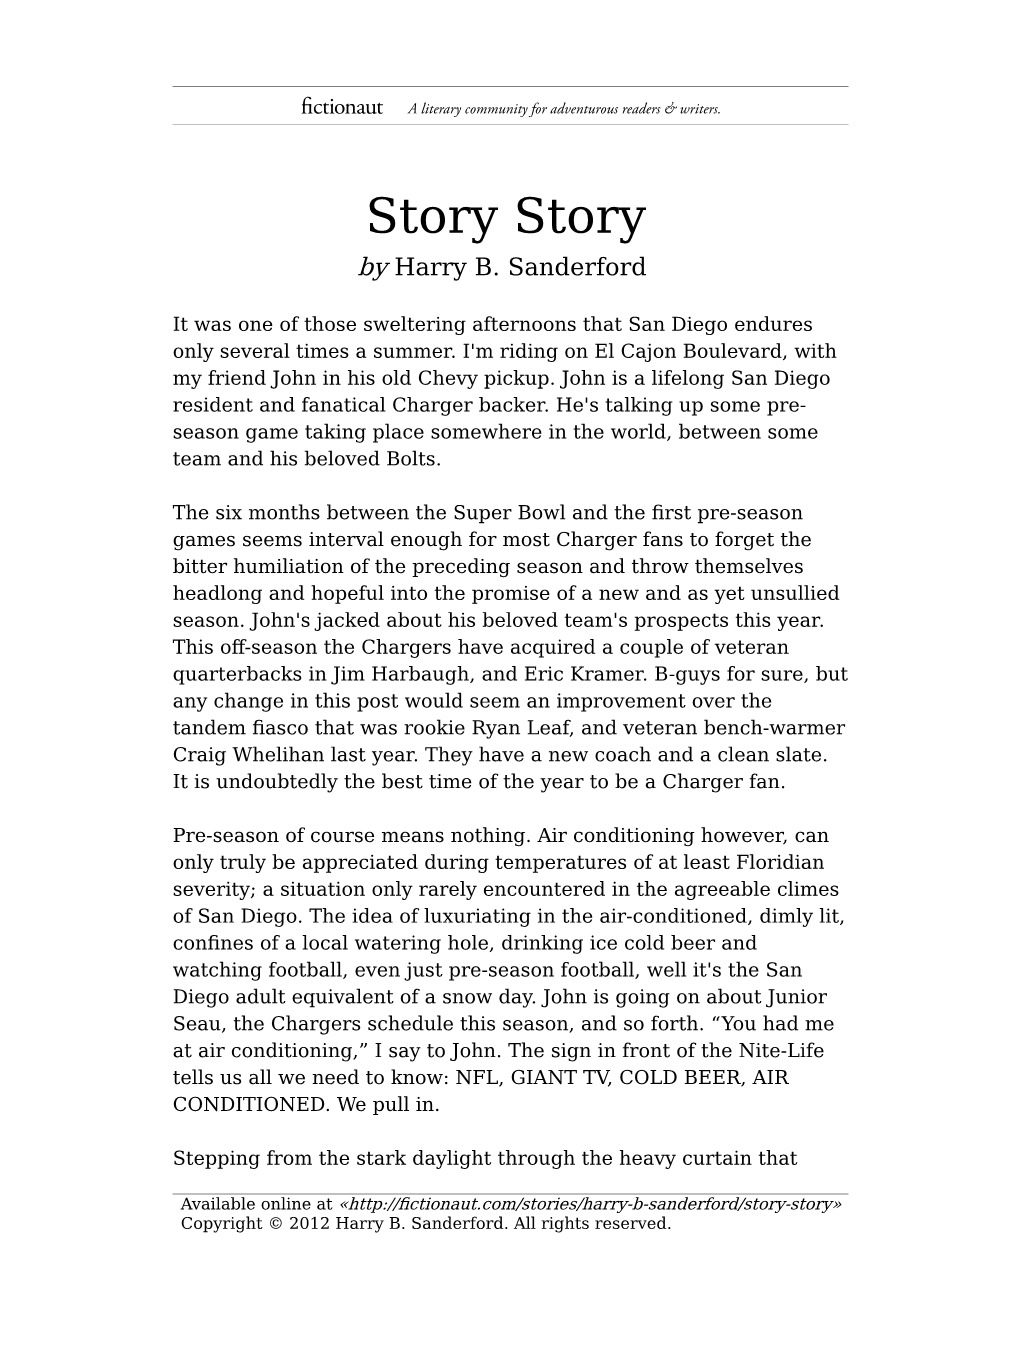 Story Story by Harry B